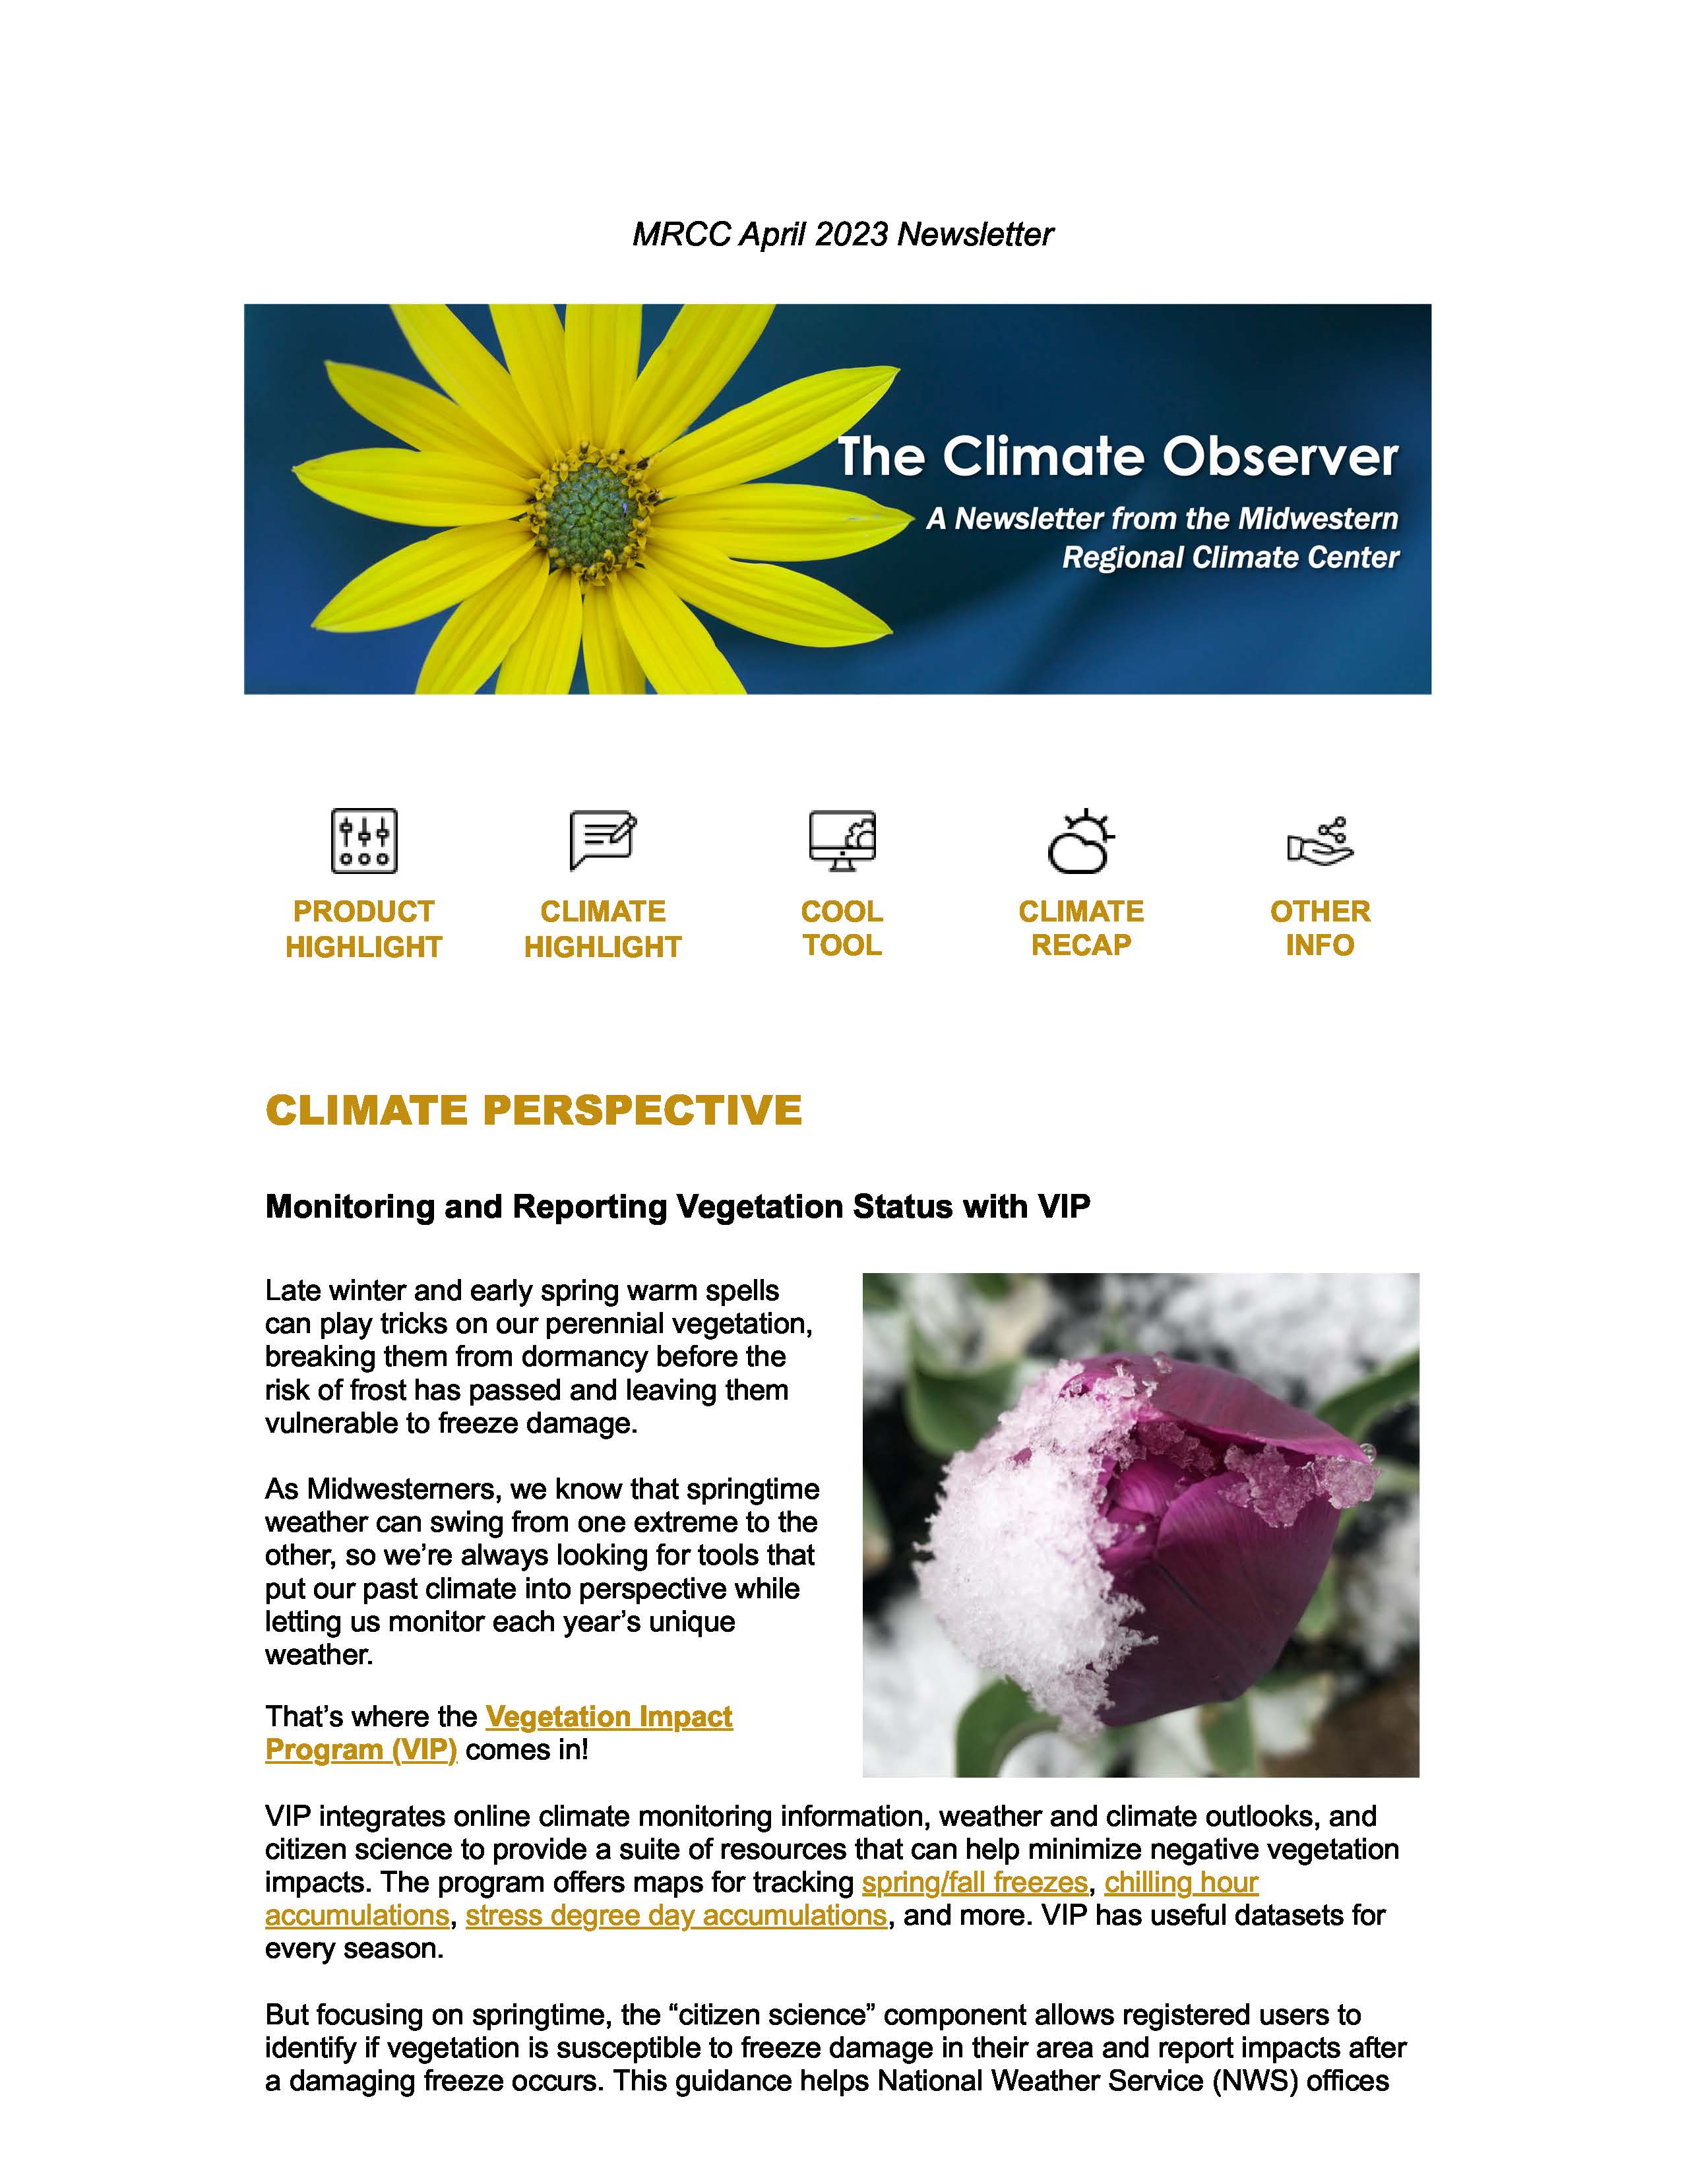 April 2023 "The Climate Observer"